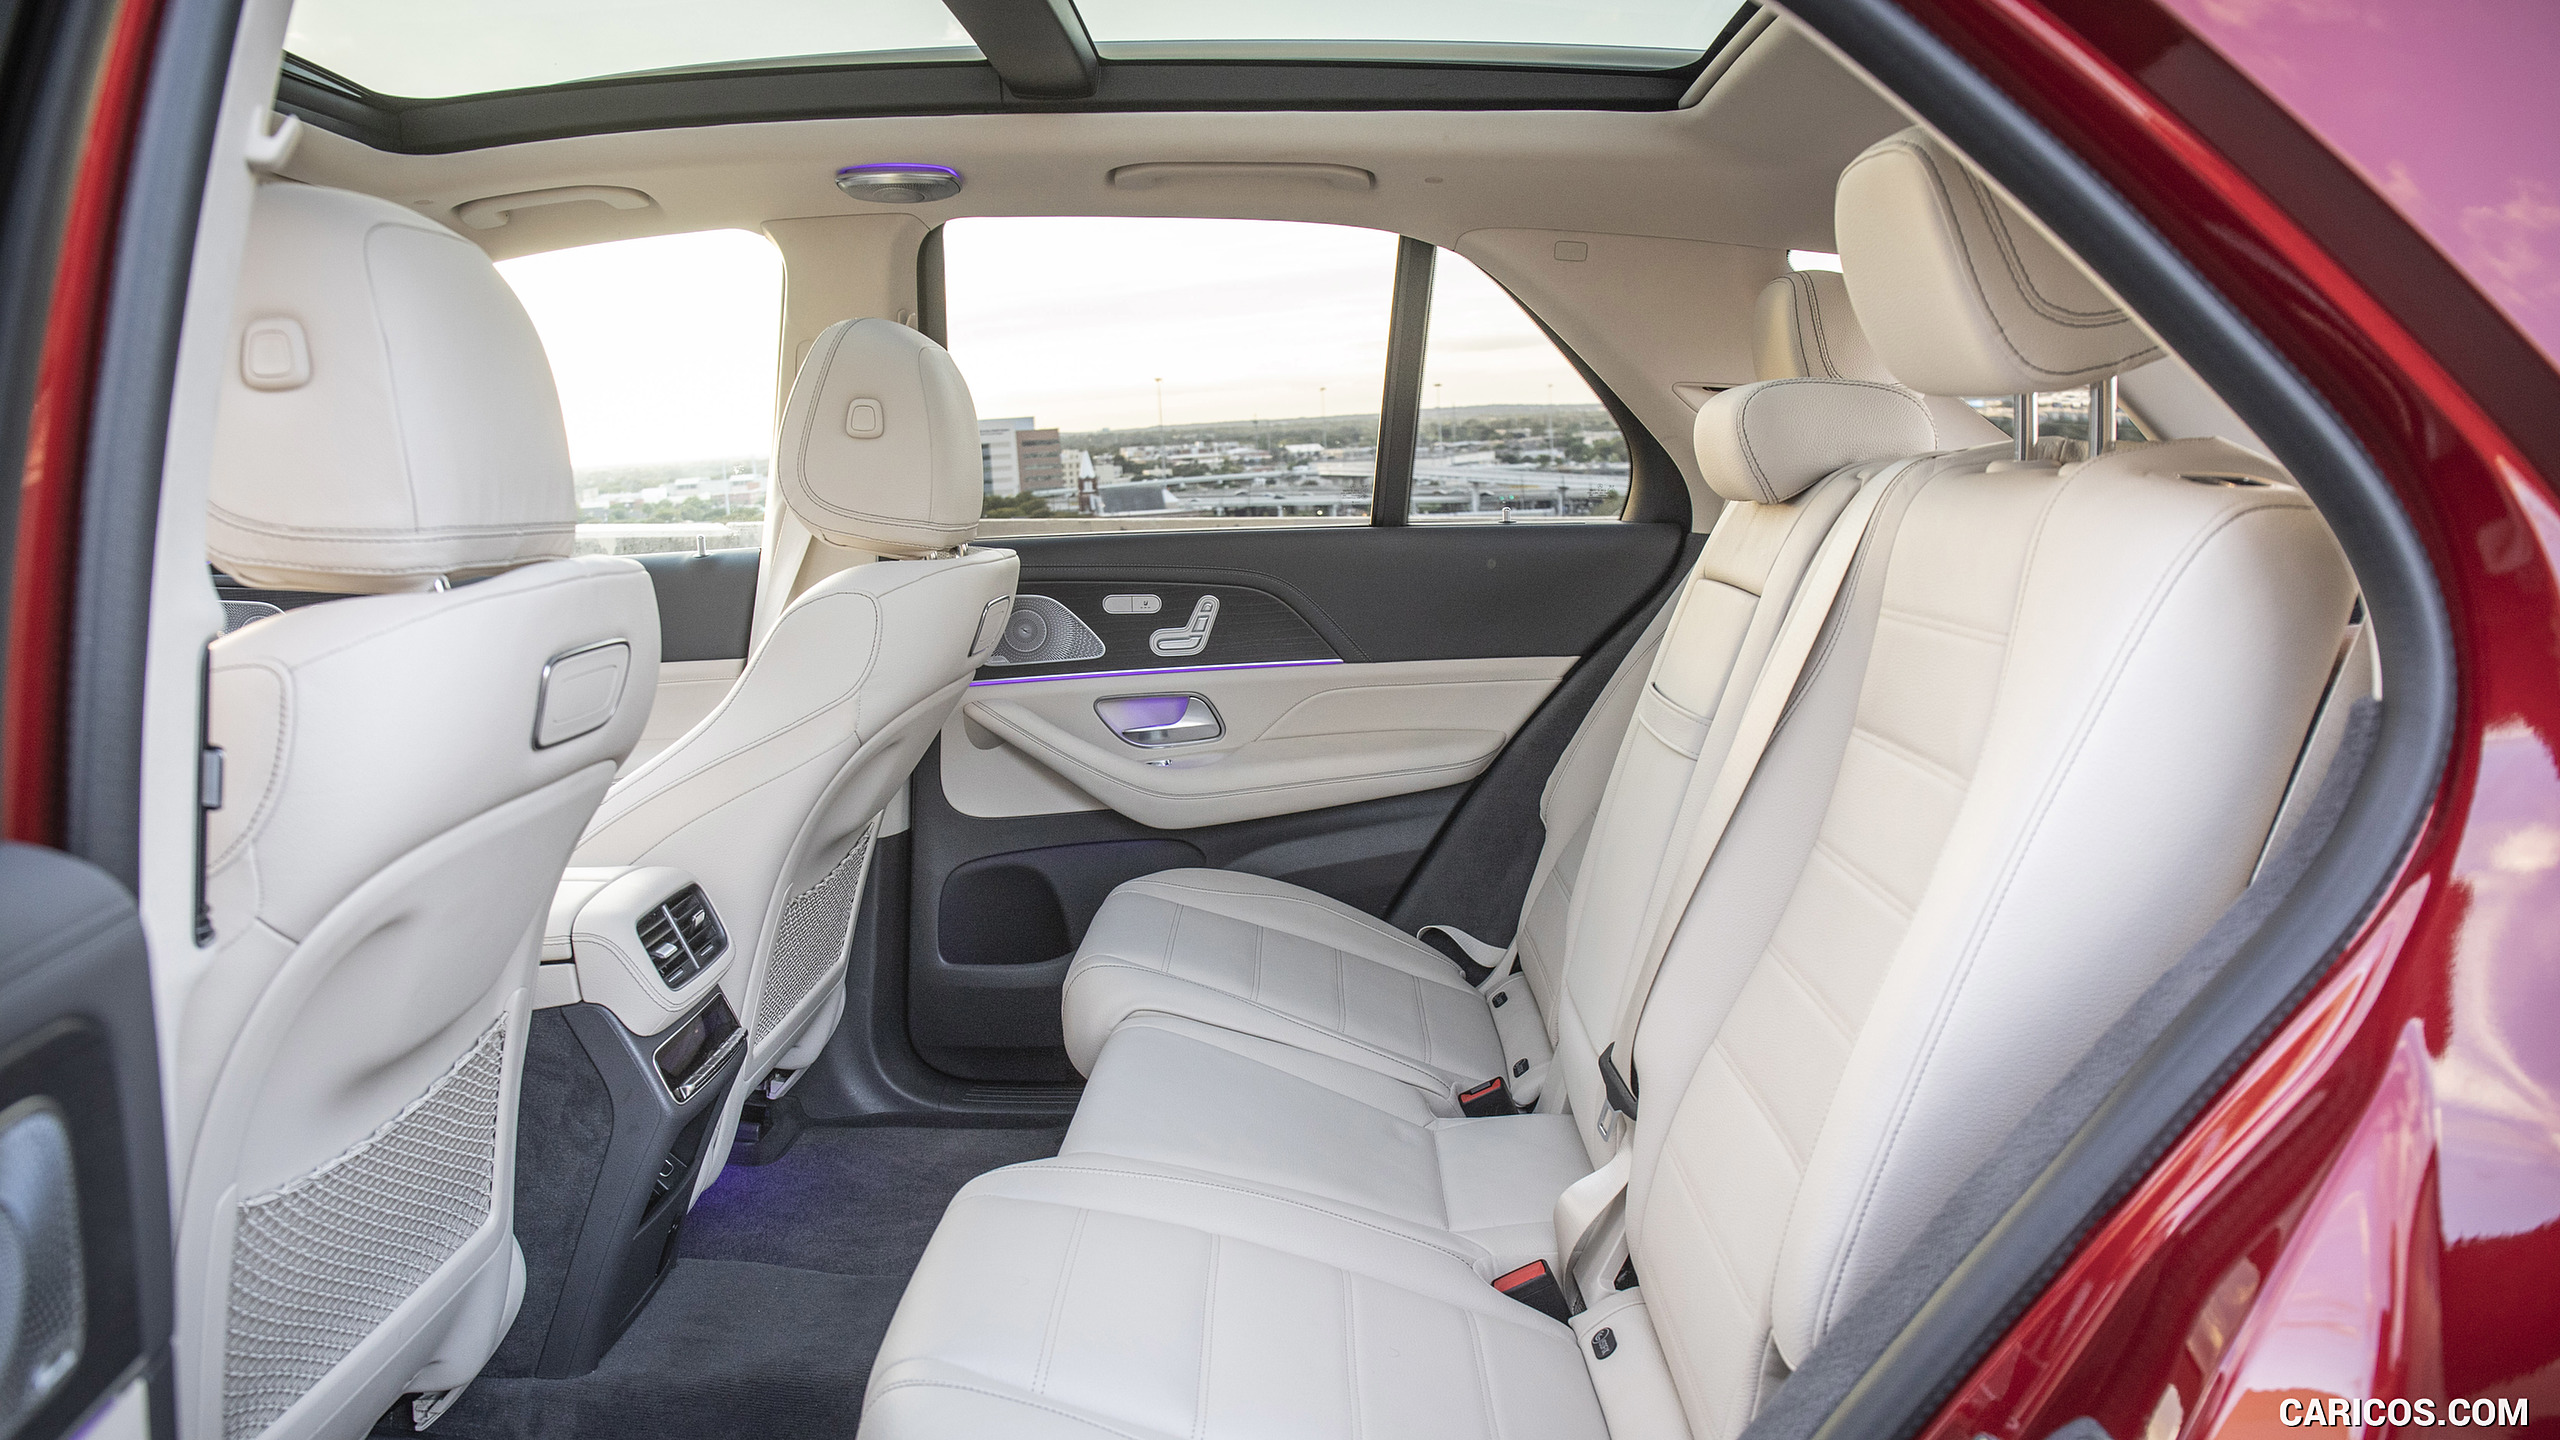 2020 Mercedes-Benz GLE 450 4MATIC (Color: Designo Hyazinth Red Metallic; US-Spec) - Interior, Rear Seats, #352 of 358